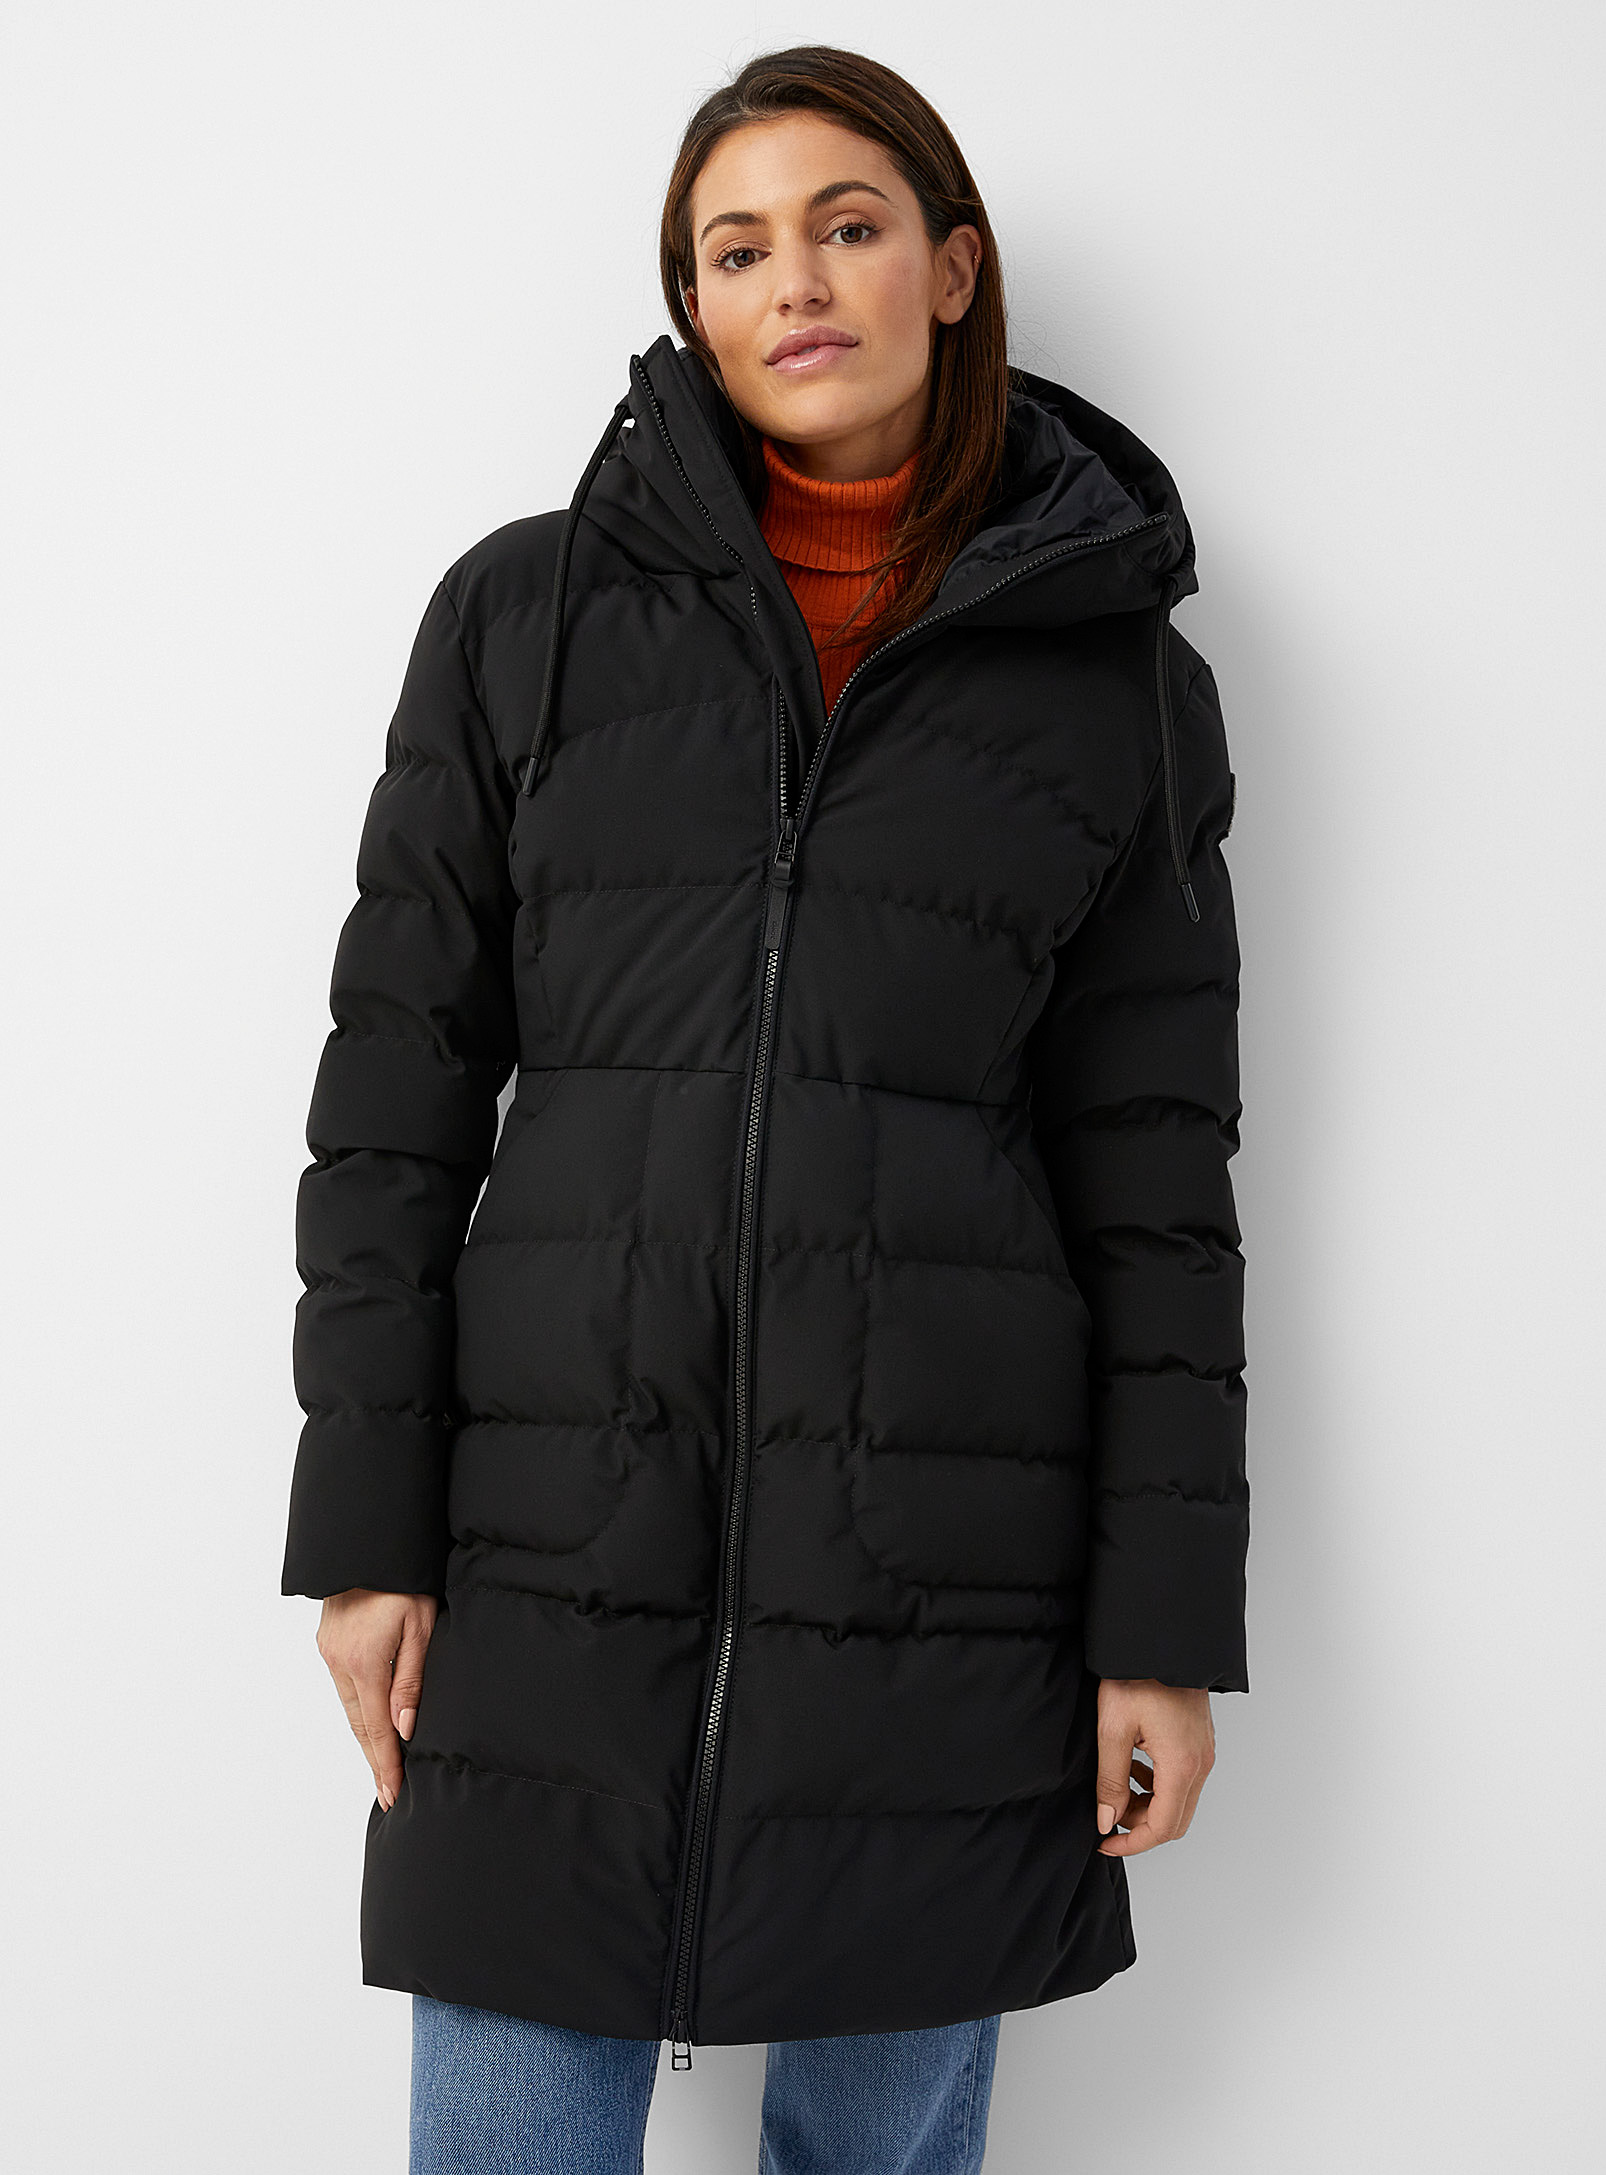 Kanuk - Women's Notting Hill fitted puffer jacket